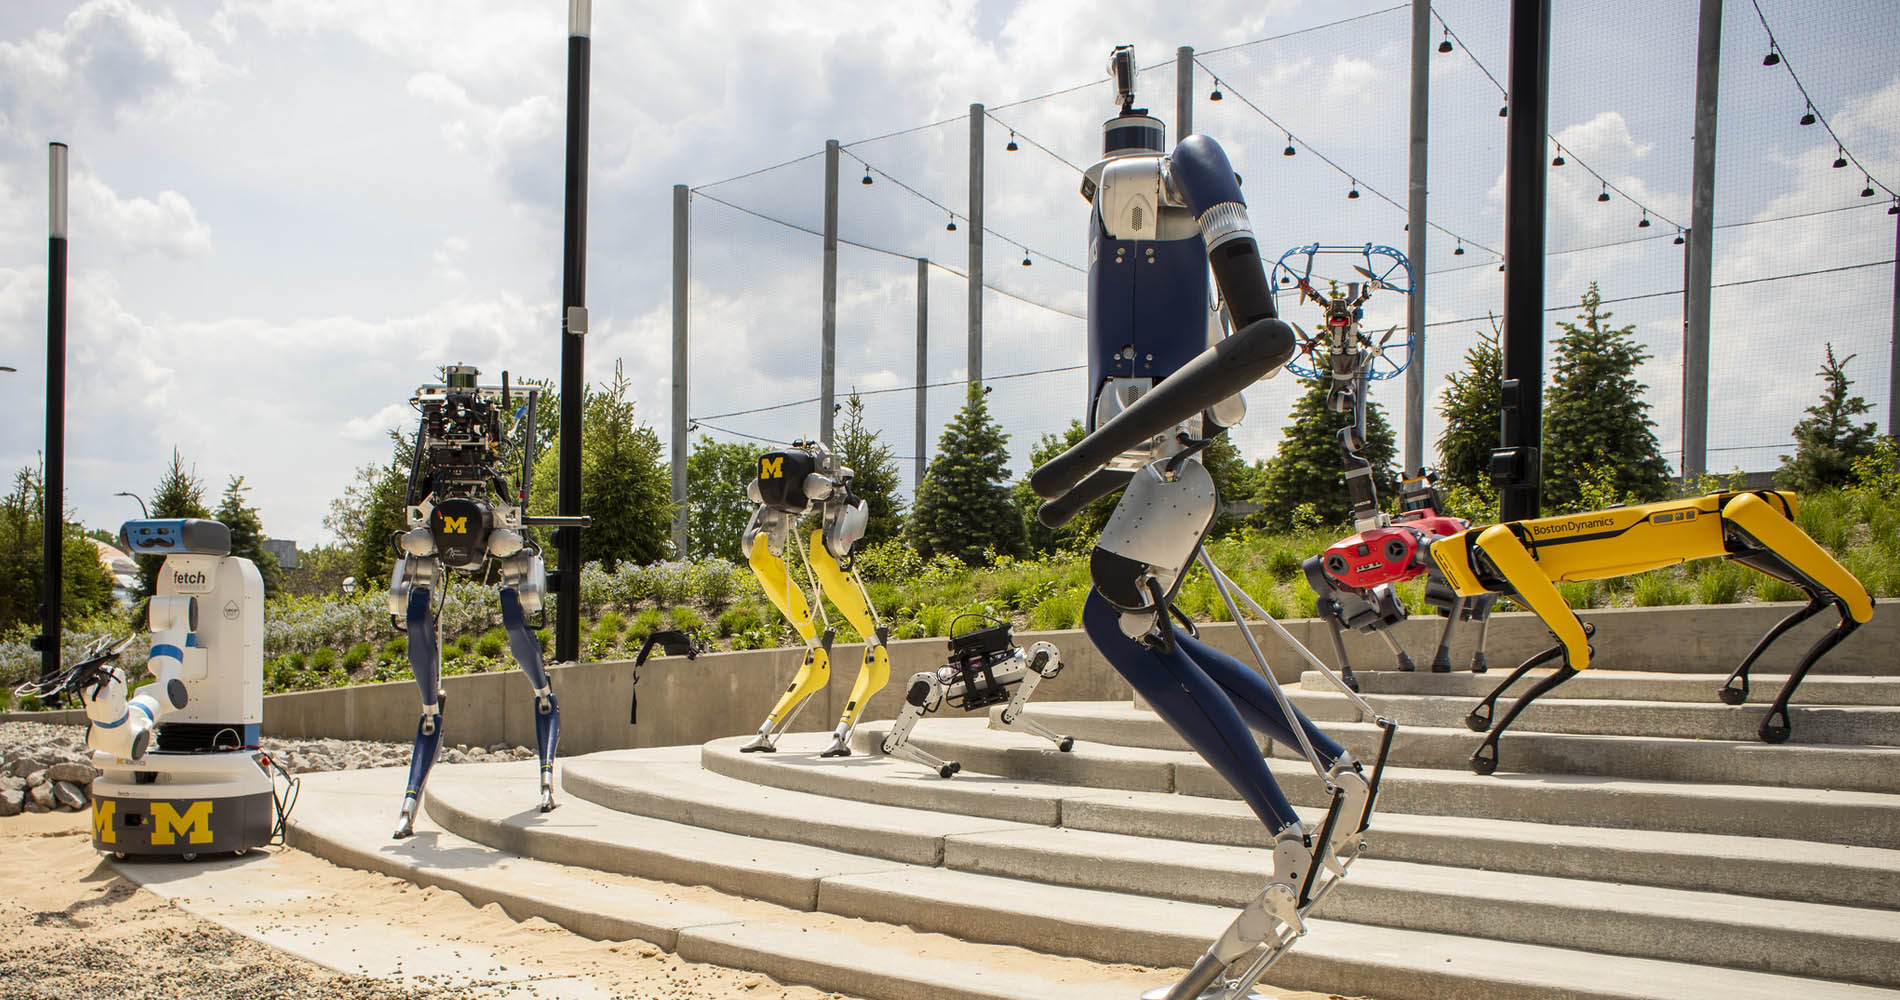 Numerous robots are organized to showcase the Robot Garden near the Robotics Institute building.